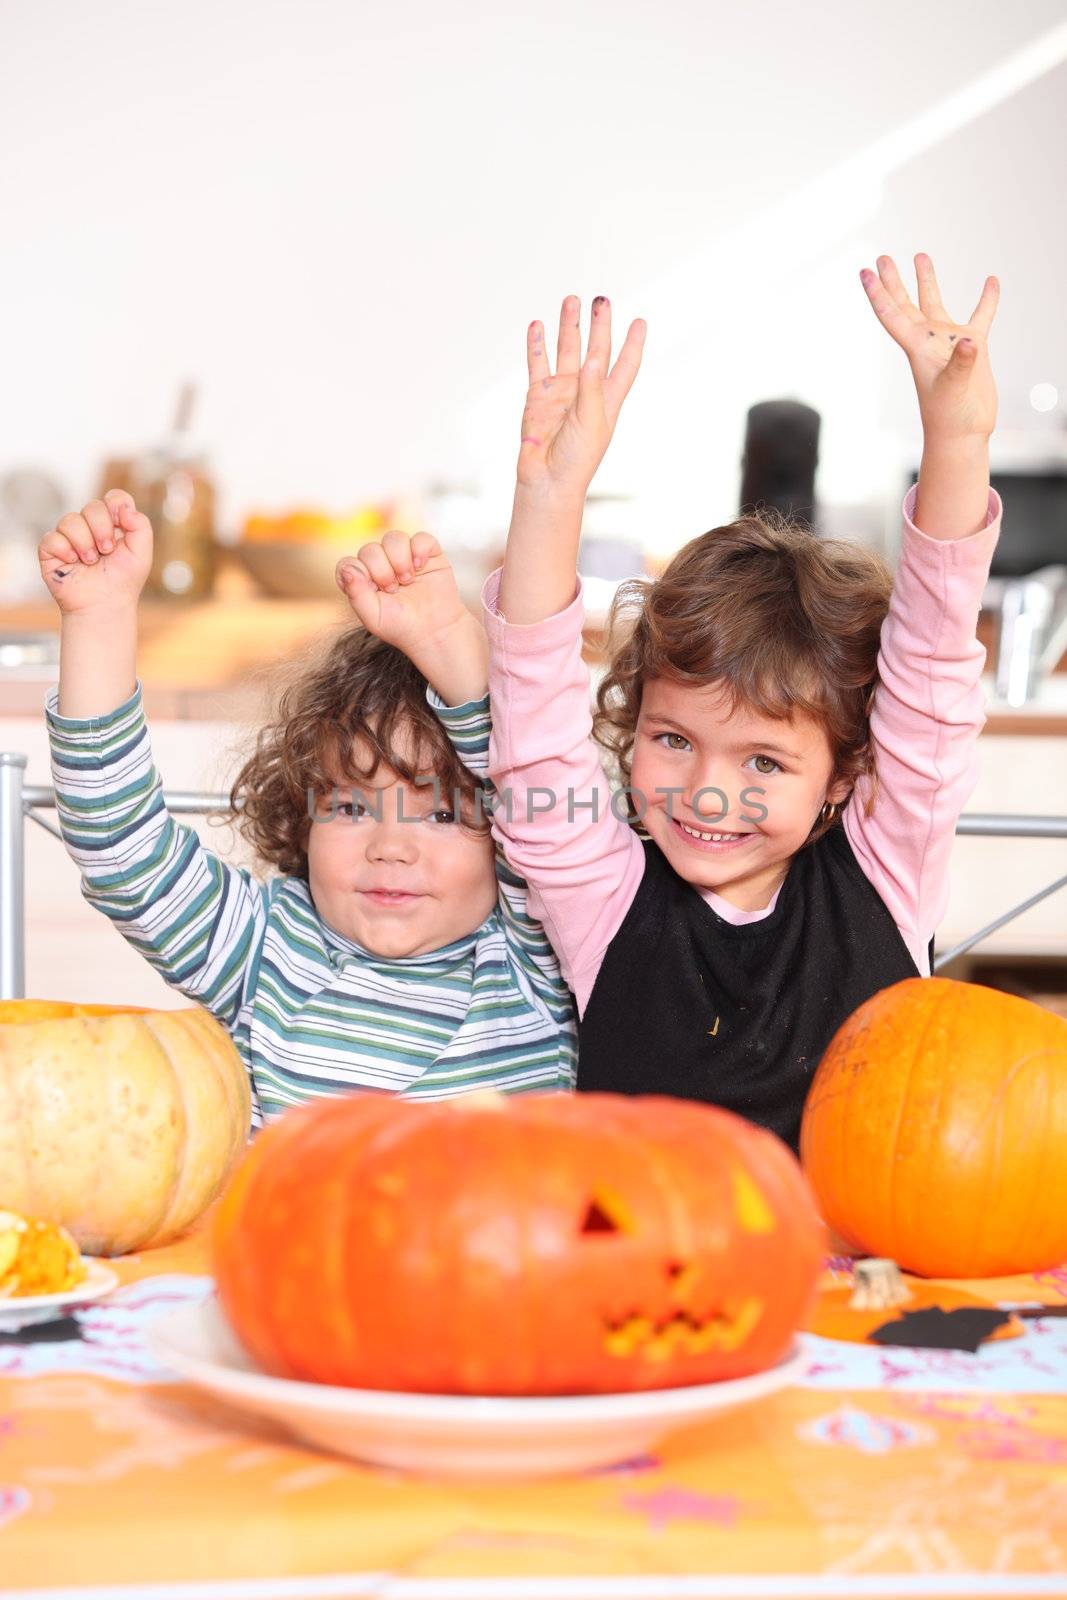 Children carving pumpkins by phovoir